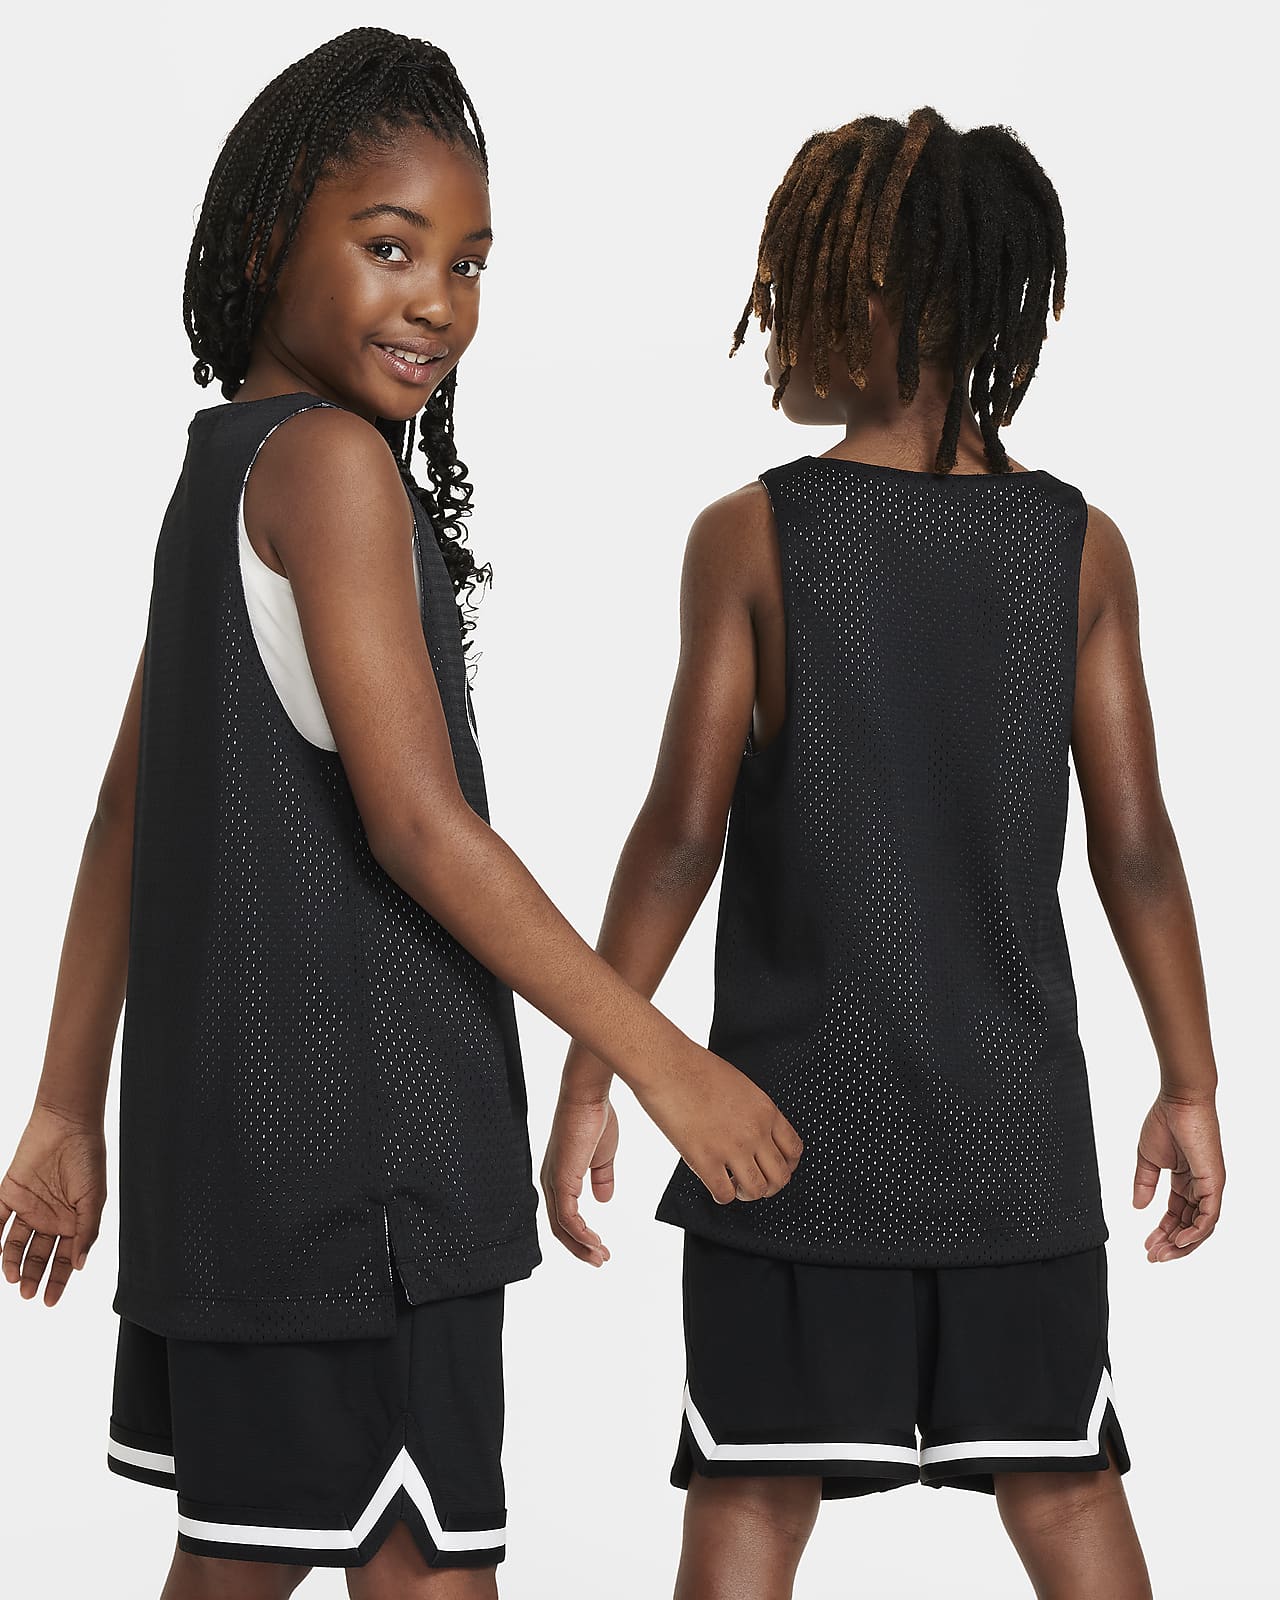 Nike Culture of Basketball Big Kids' Reversible Basketball Jersey 'Bla –  Bouncewear